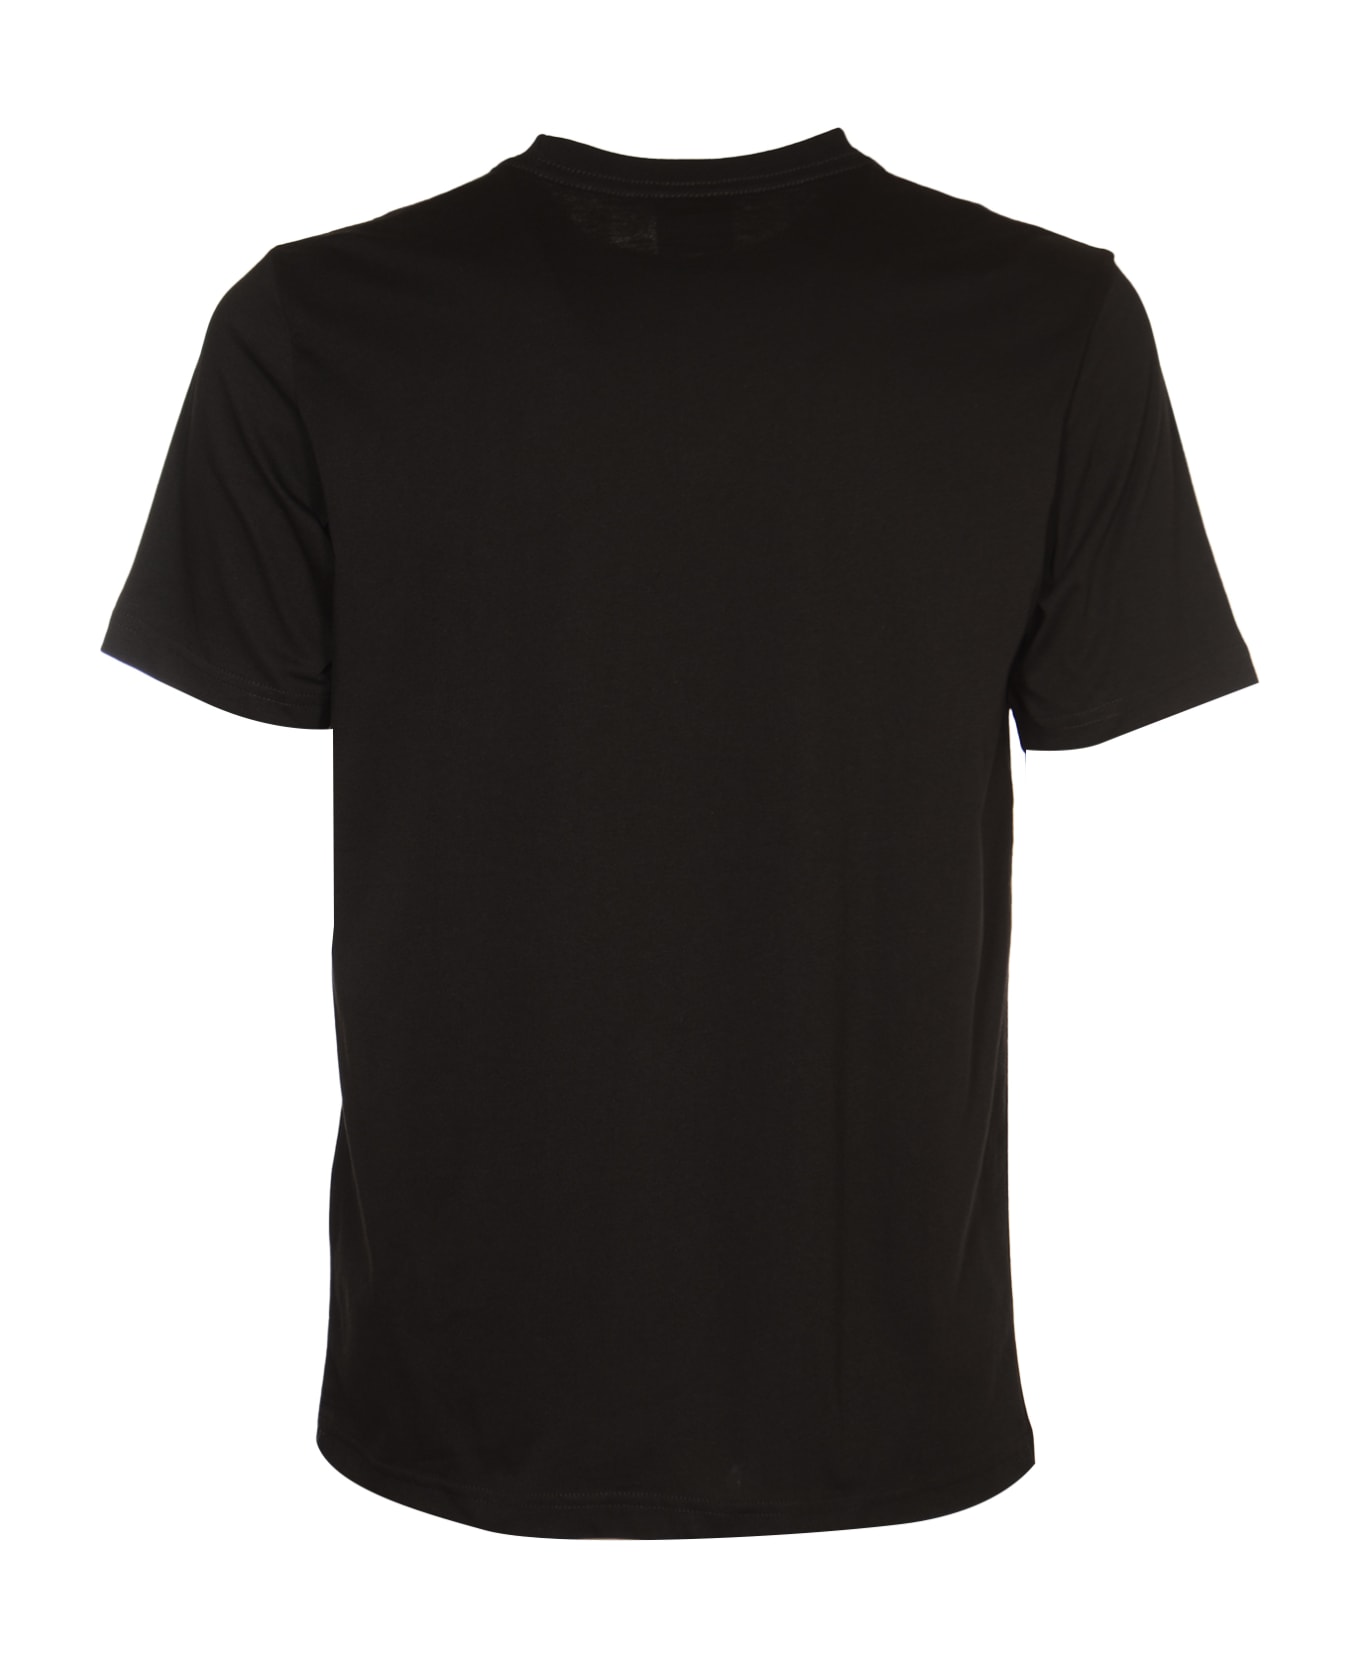 Paul Smith Teddy T-shirt - Black